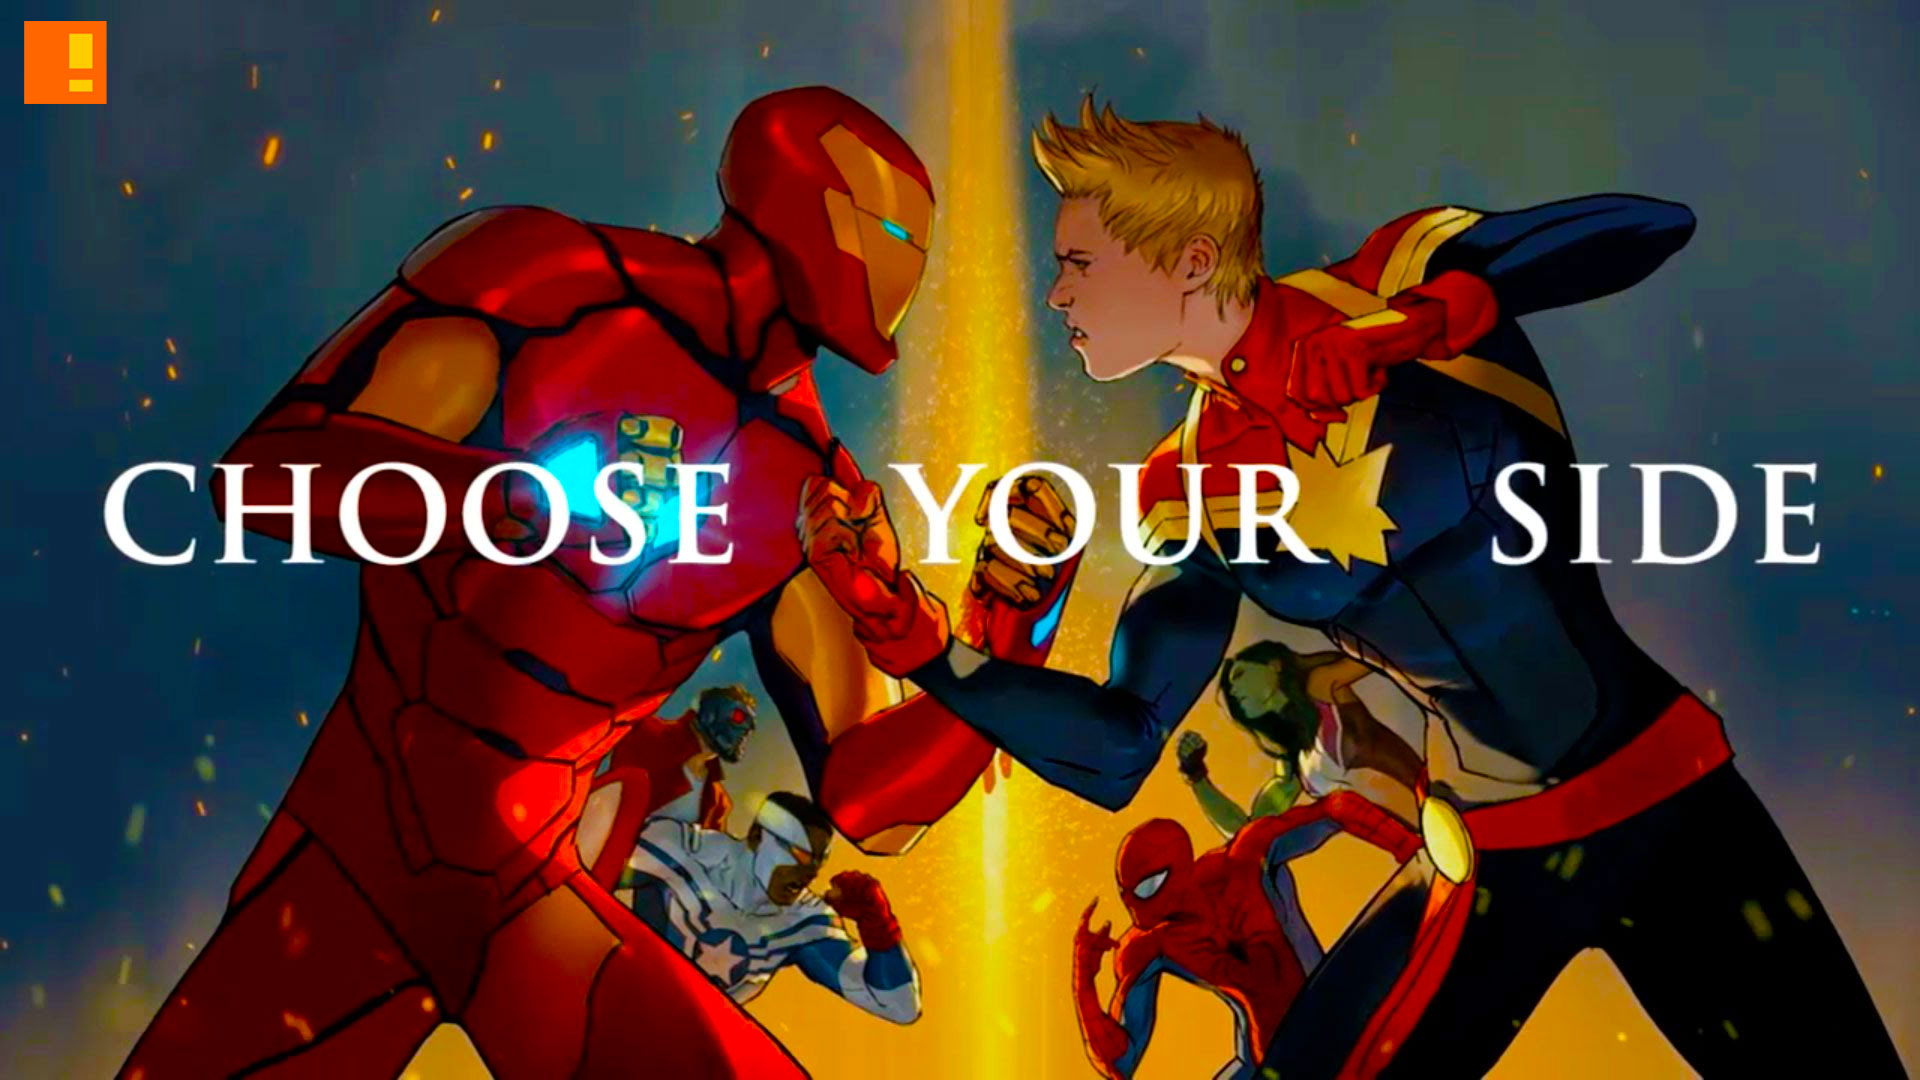 iron man, marvel,choose your side, captain marvel, ms marvel, tony stark, spider-man, captain america,civil war 2, civil war II,marvel comics, trailer